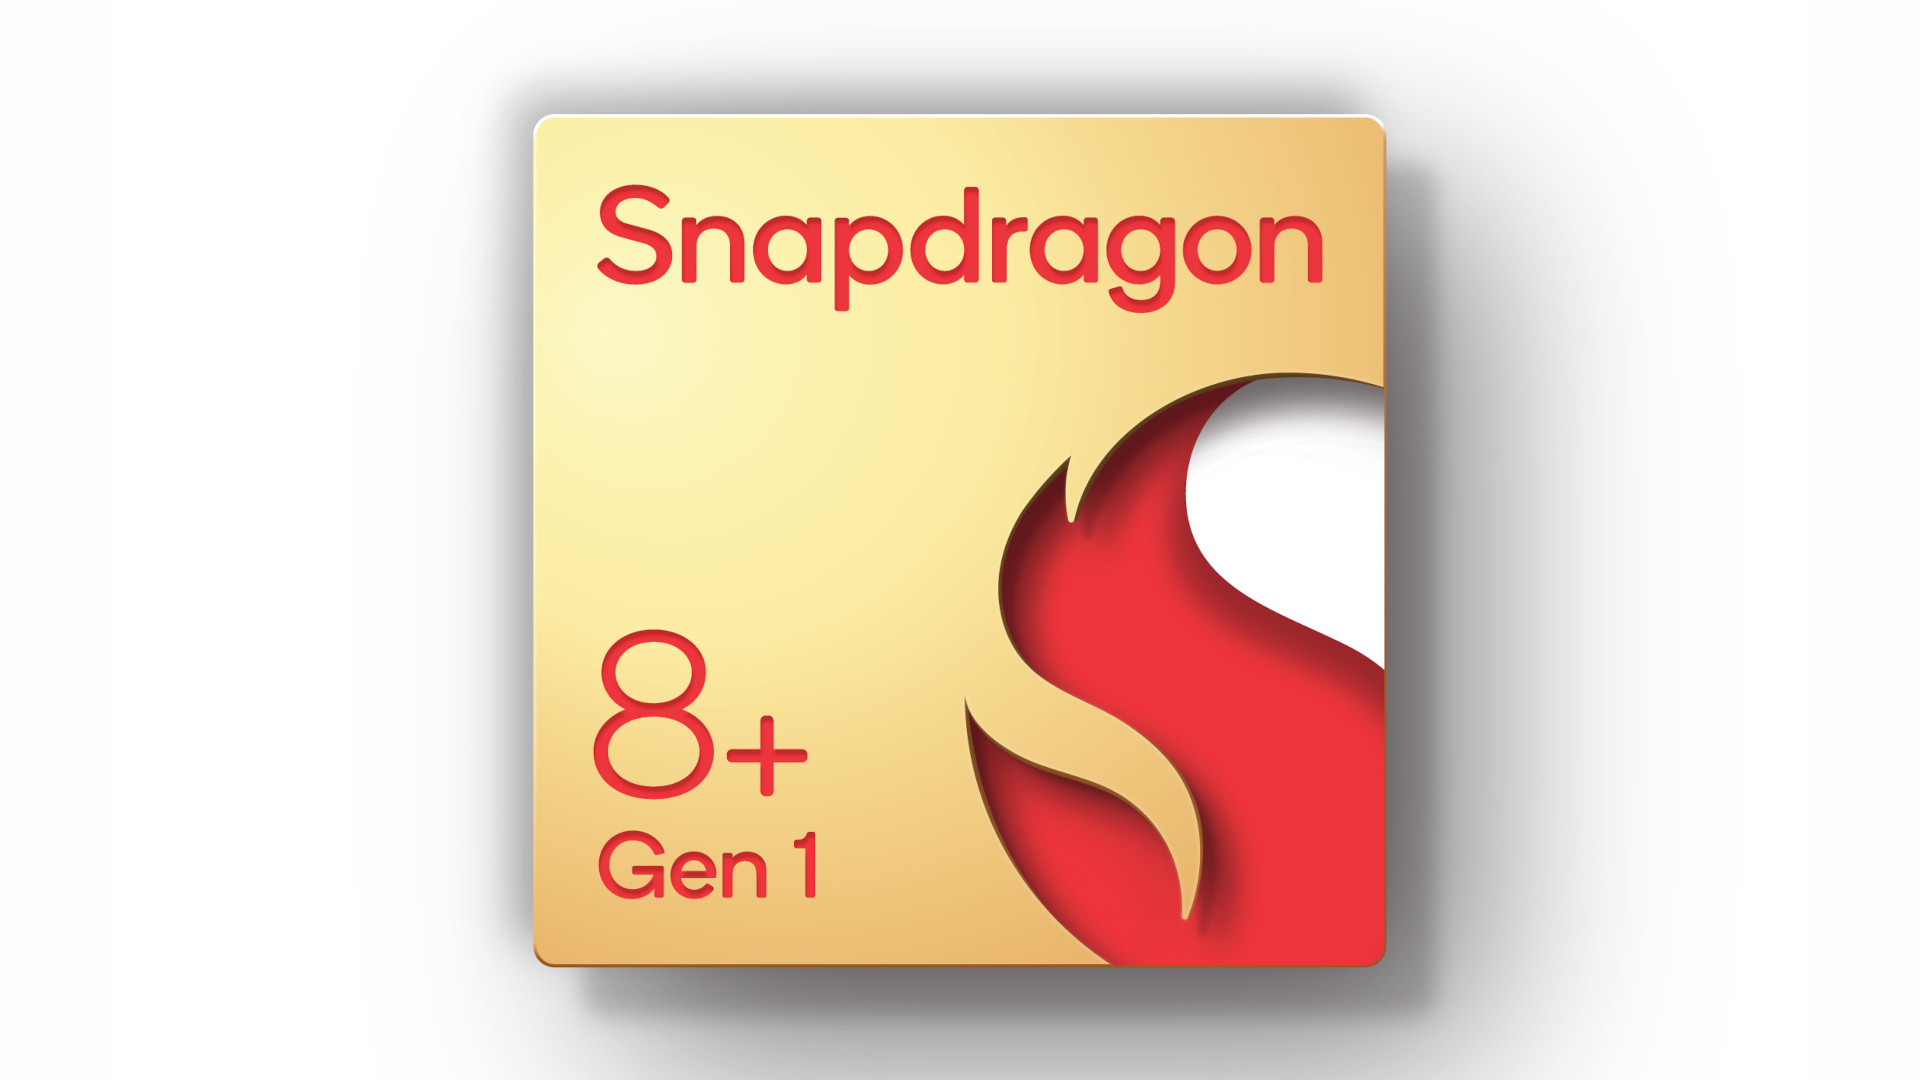 Logo Qualcomm Snapdragon 8 Plus Gen 1